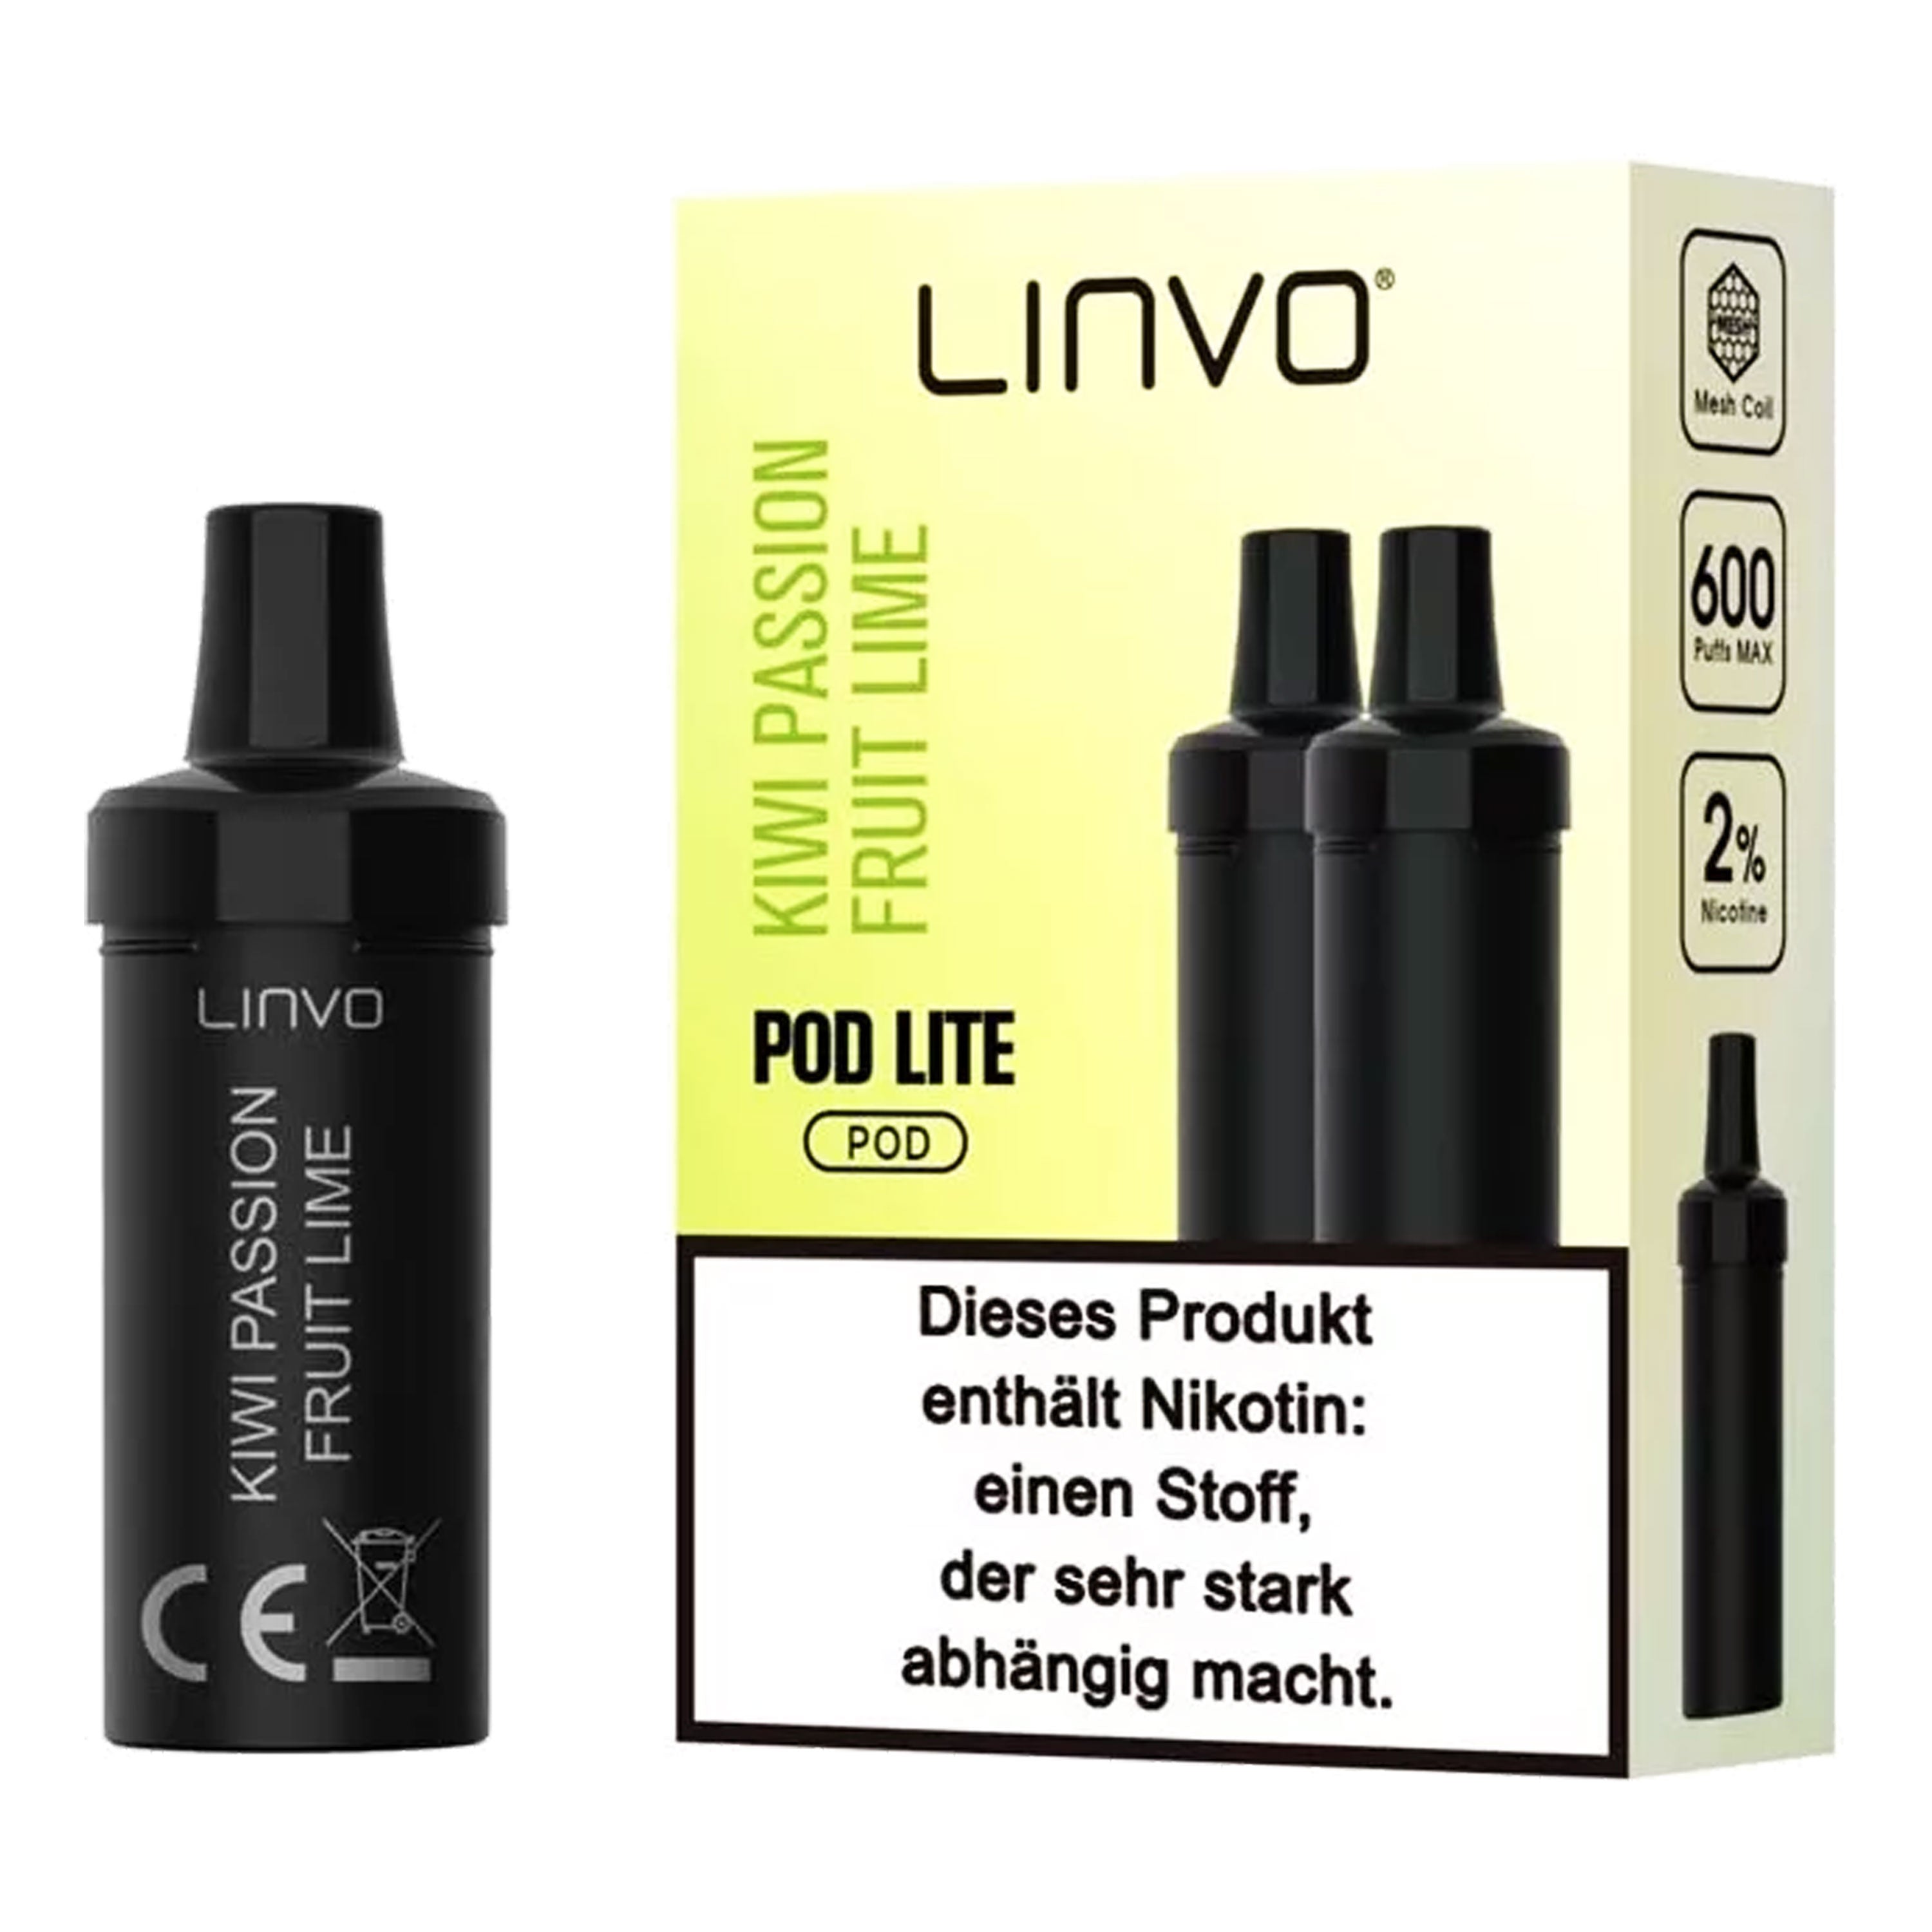 Linvo  - Pod Lite - Kiwi Passionfruit Lime (2 x 2 ml) - Pod (2 Stück)